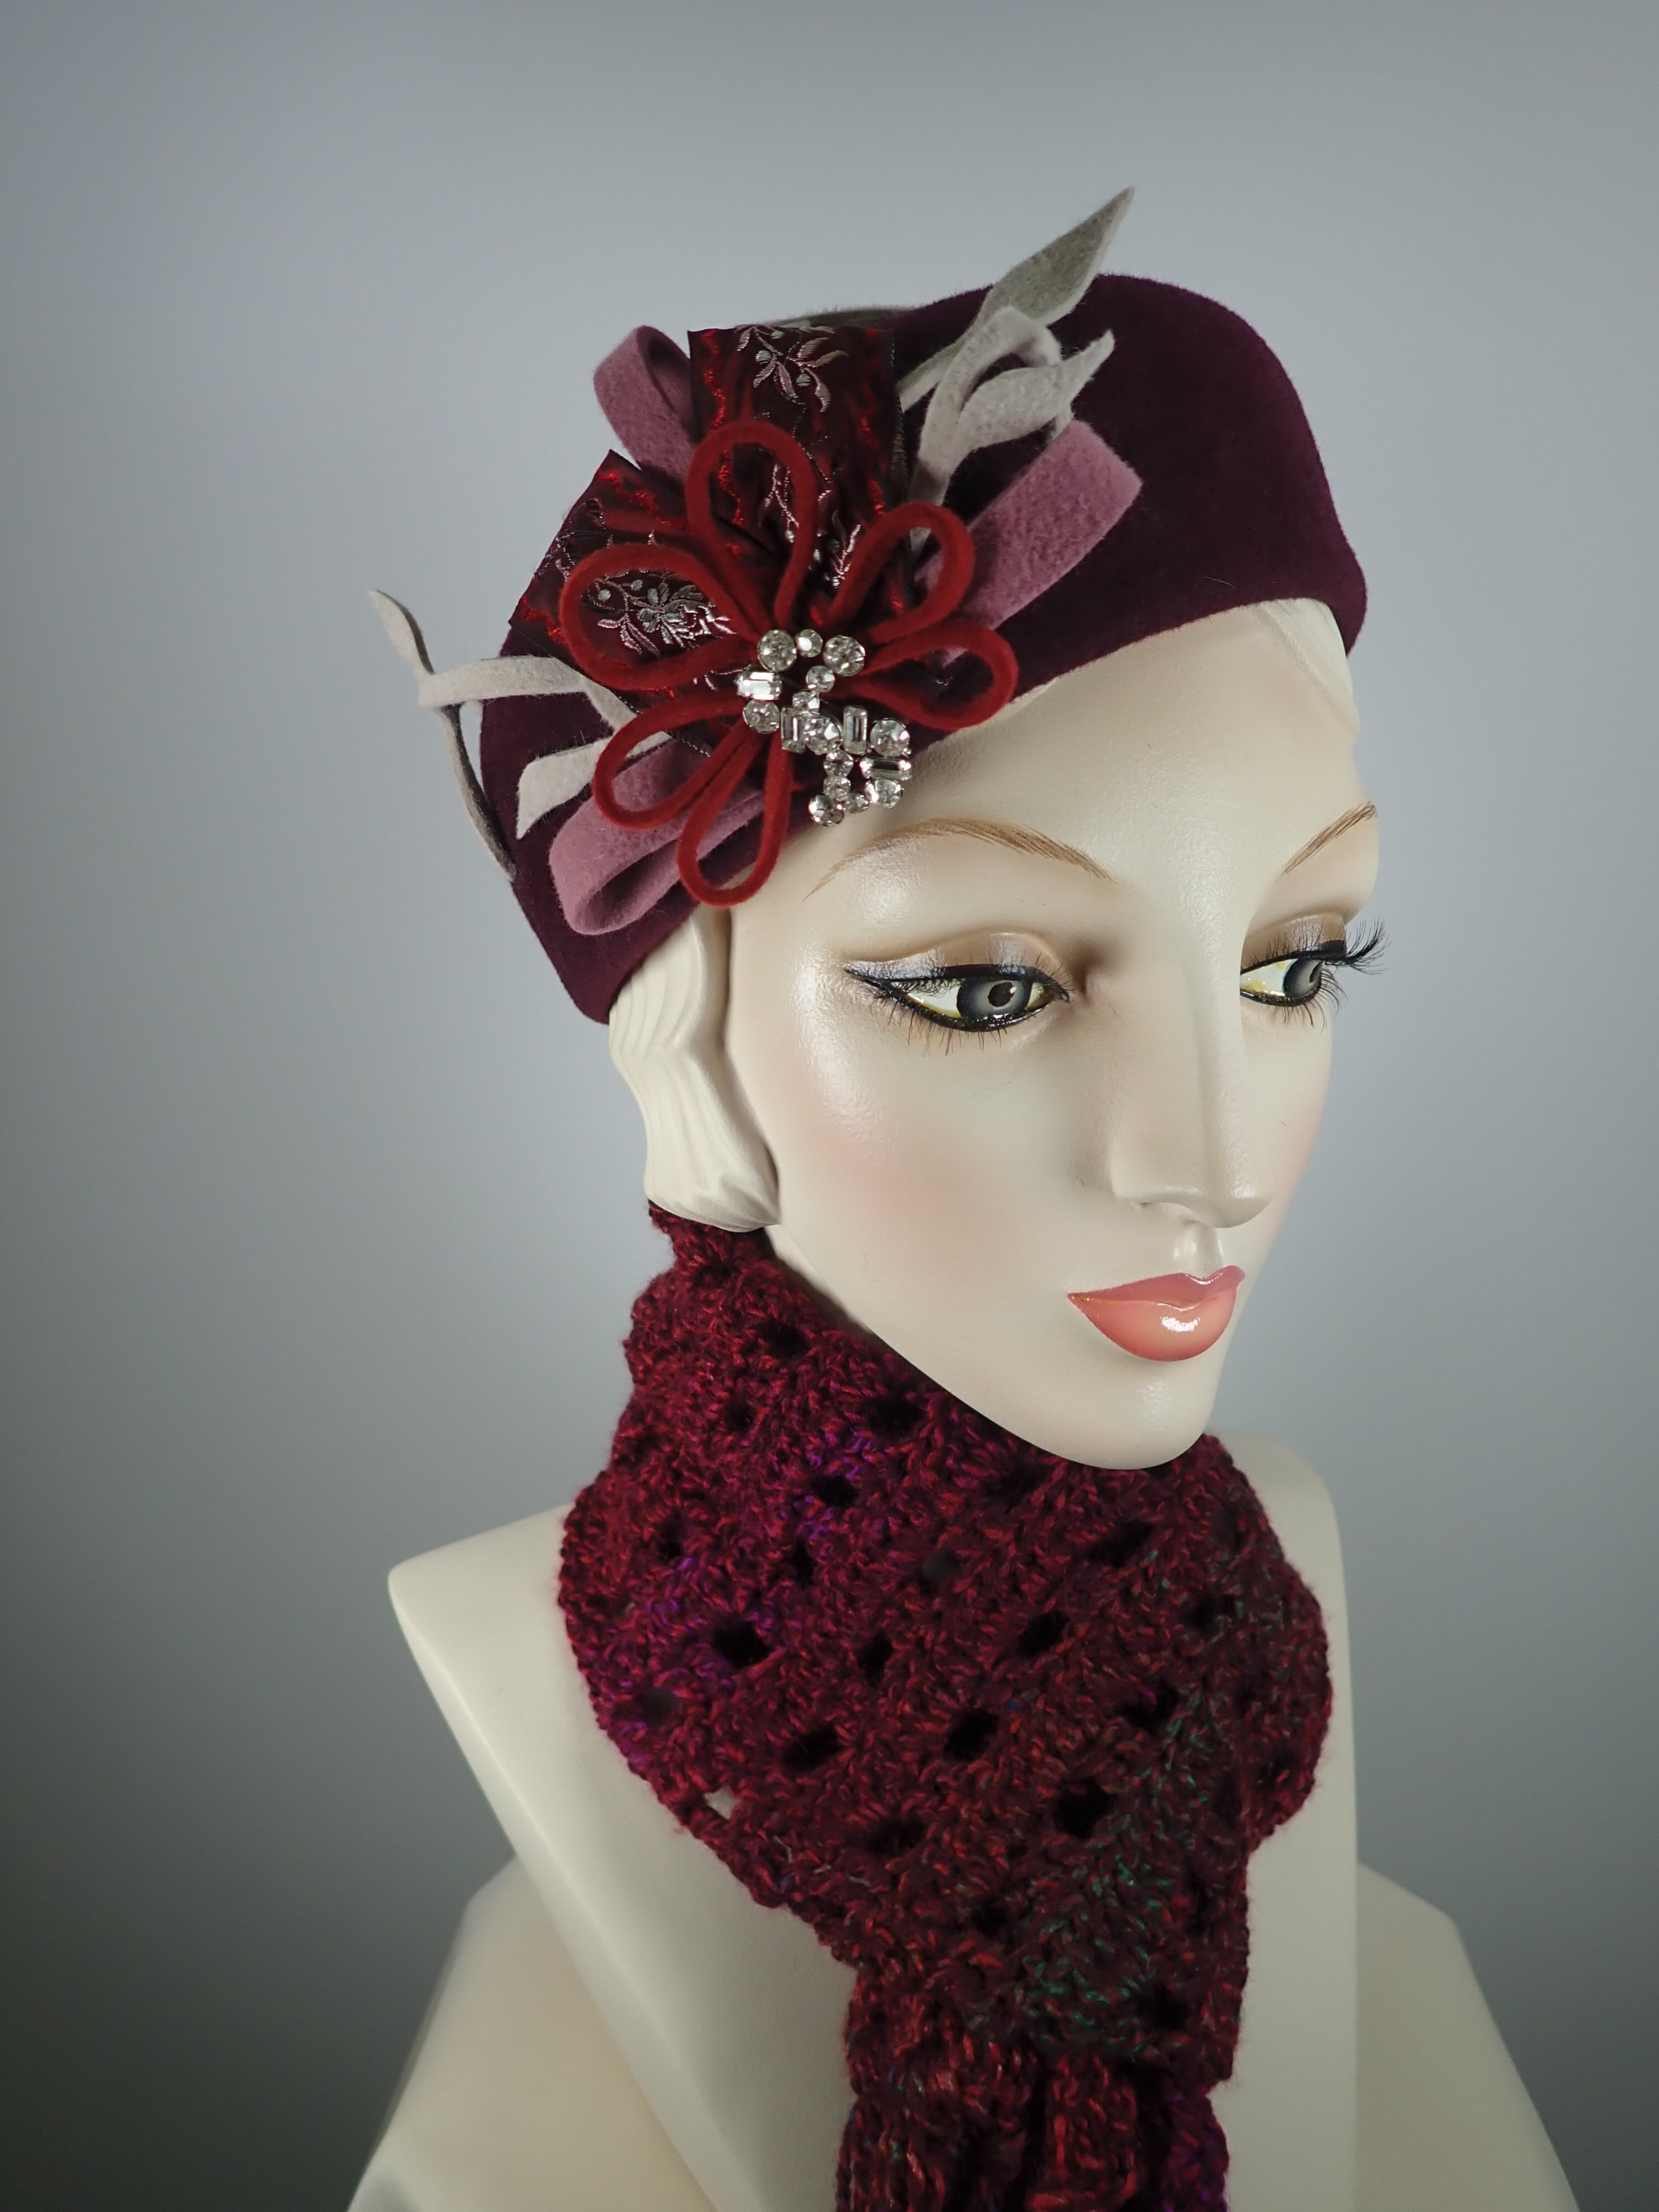 Burgundy Scarf for Men or Women - Windowpane Hand Crocheted Scarf